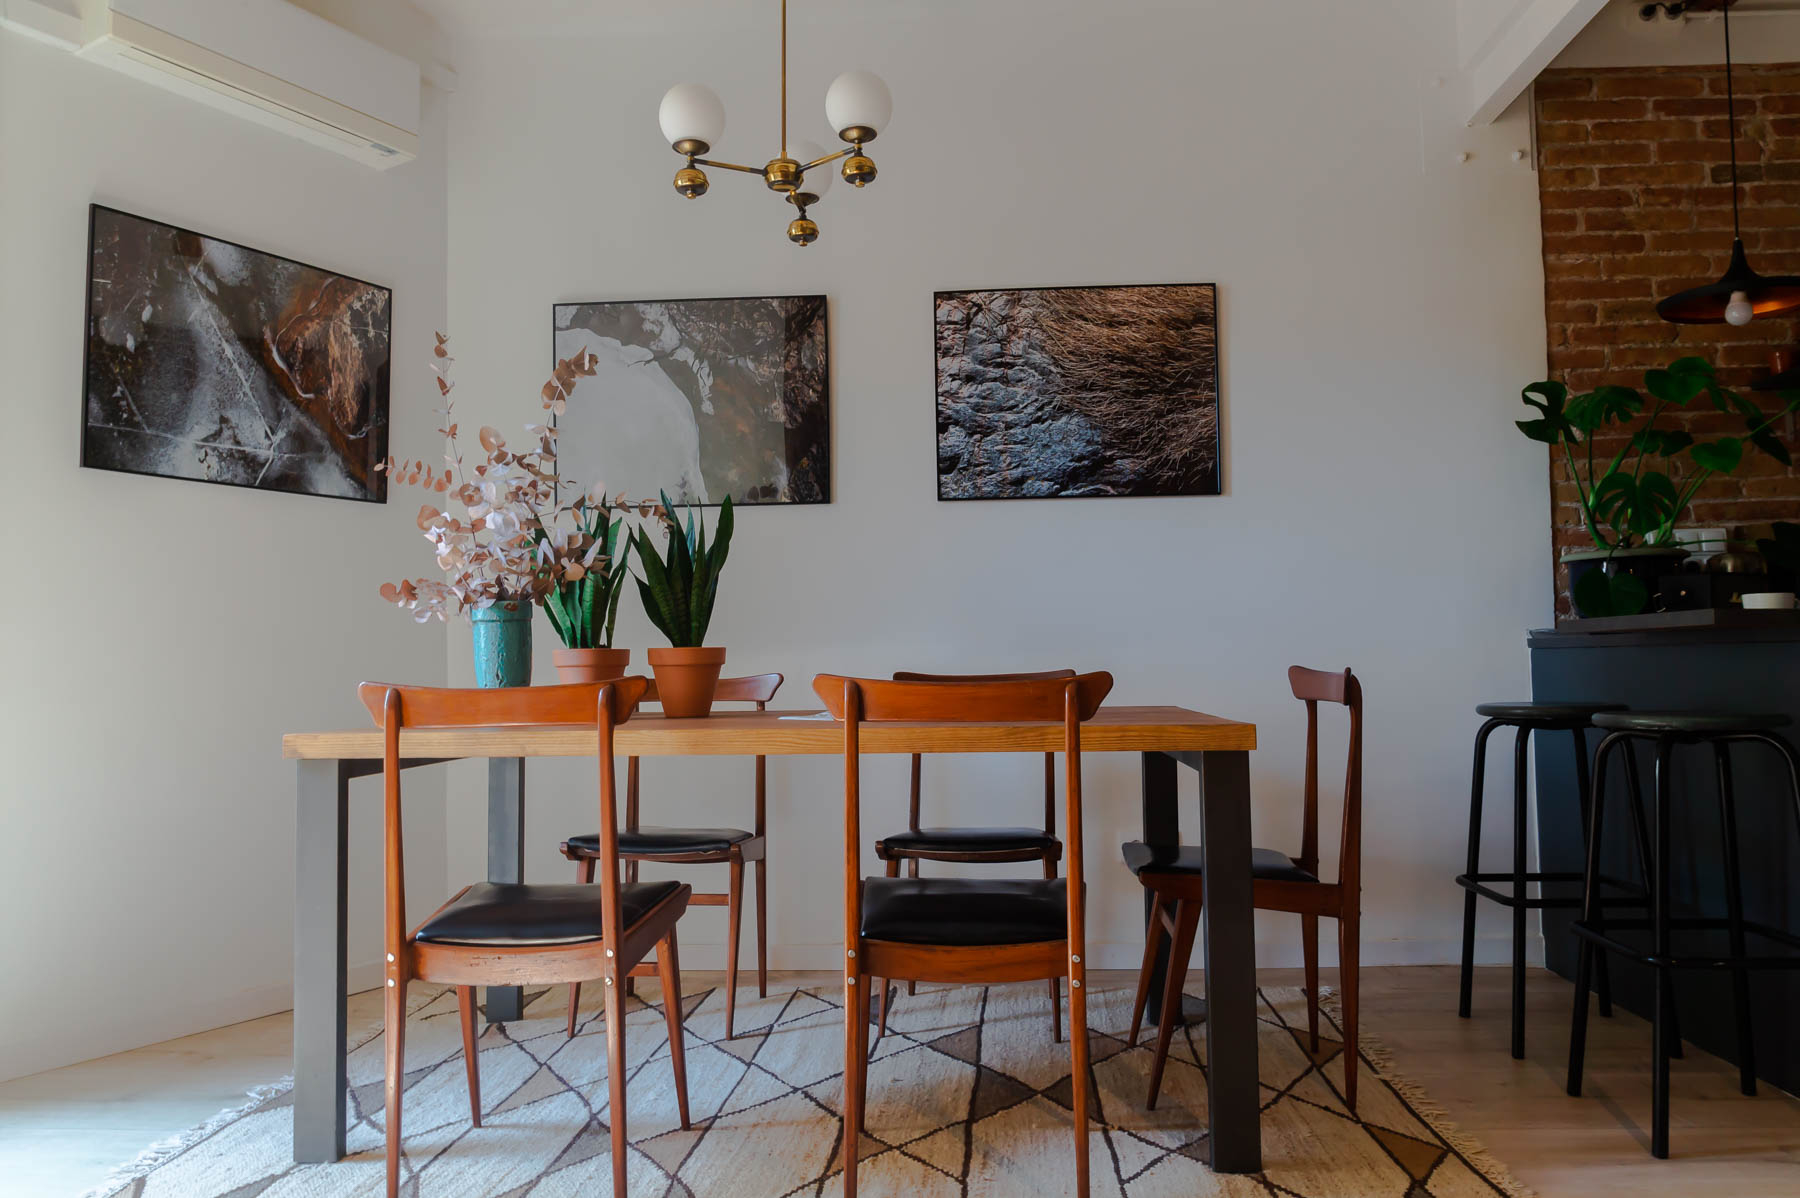 Barcelona Home tour: sun-lit retro style dining room